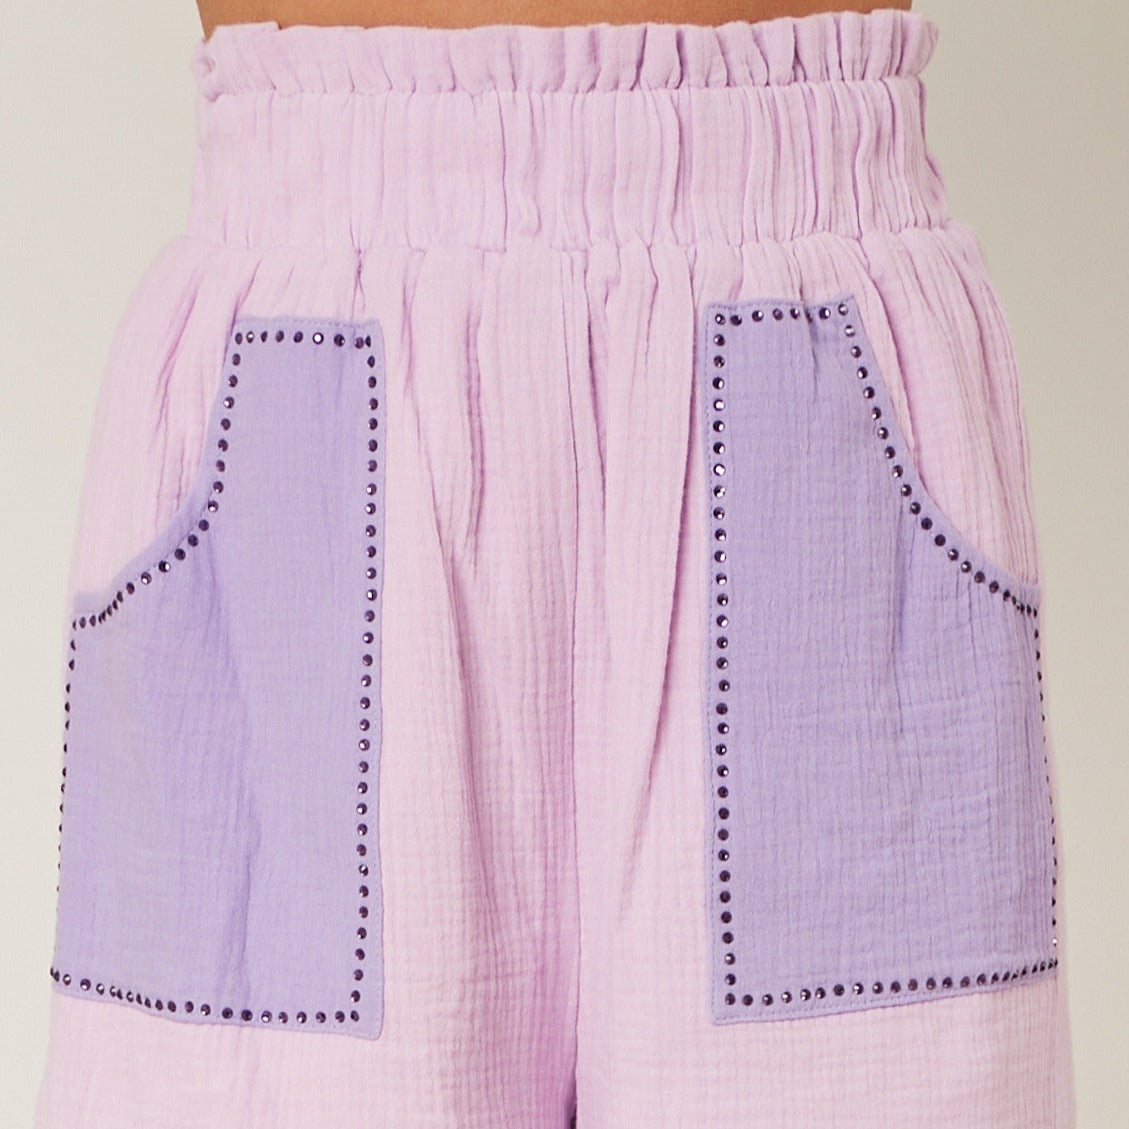 Color Block Shorts with Rhinestone Embellishments